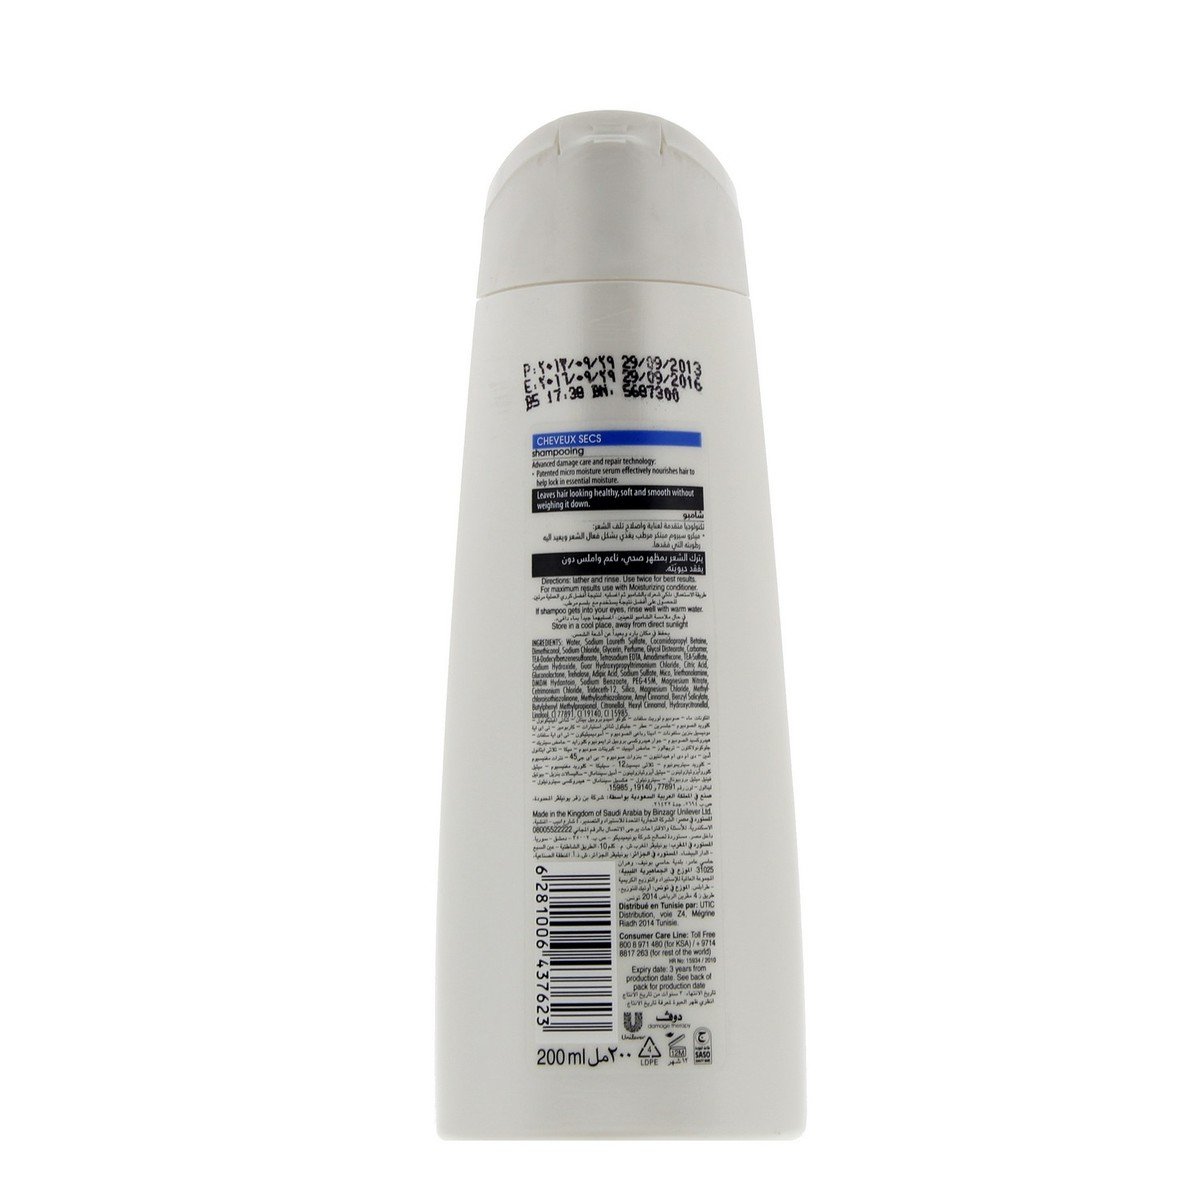 Dove Hair Therapy  Nutritive Solutions Moisturizing Shampoo For Fine Hair 200ml